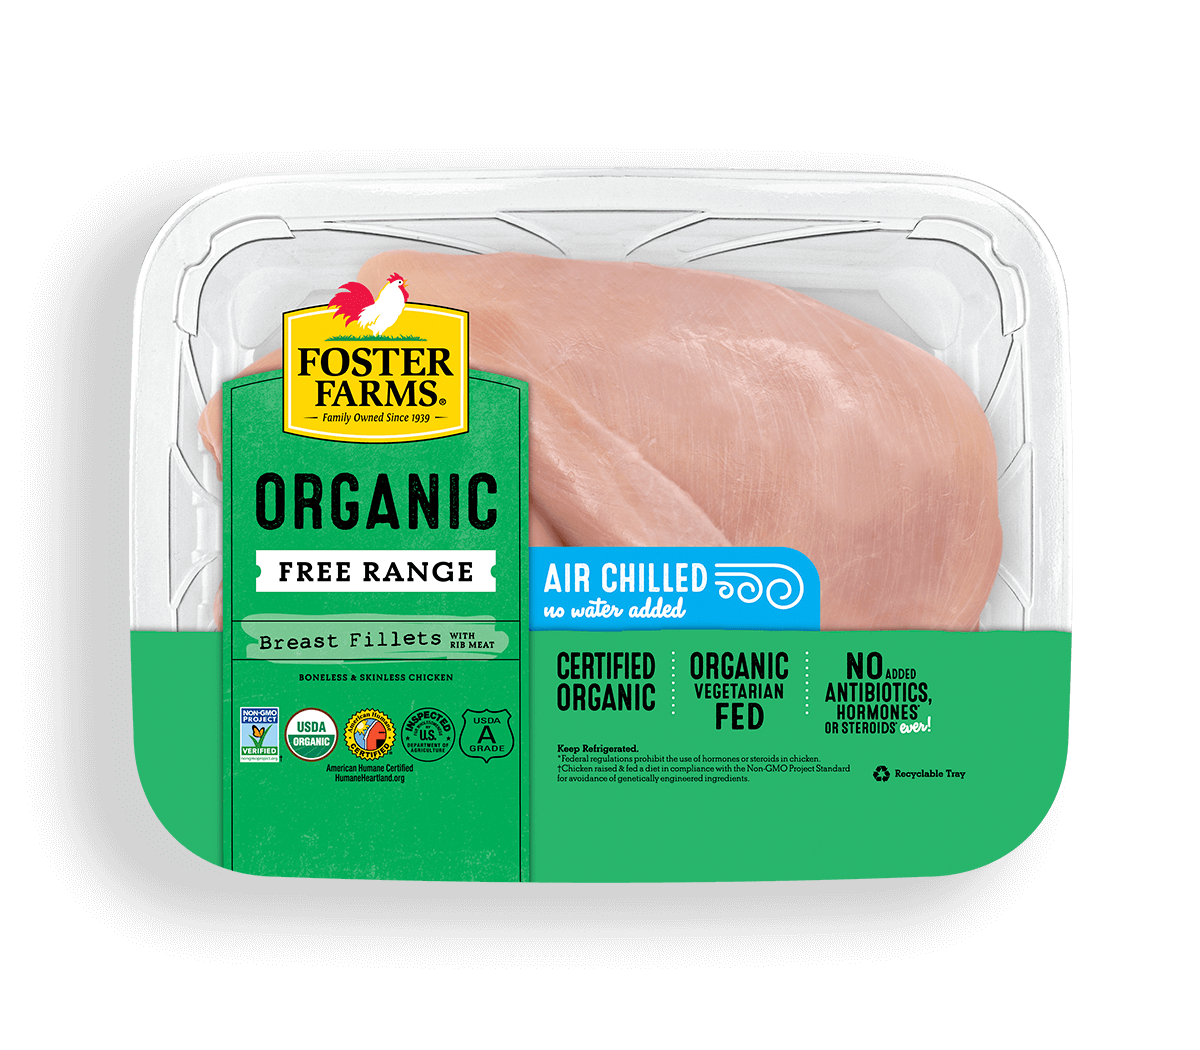 Organic Boneless Skinless Chicken Breasts Fillets